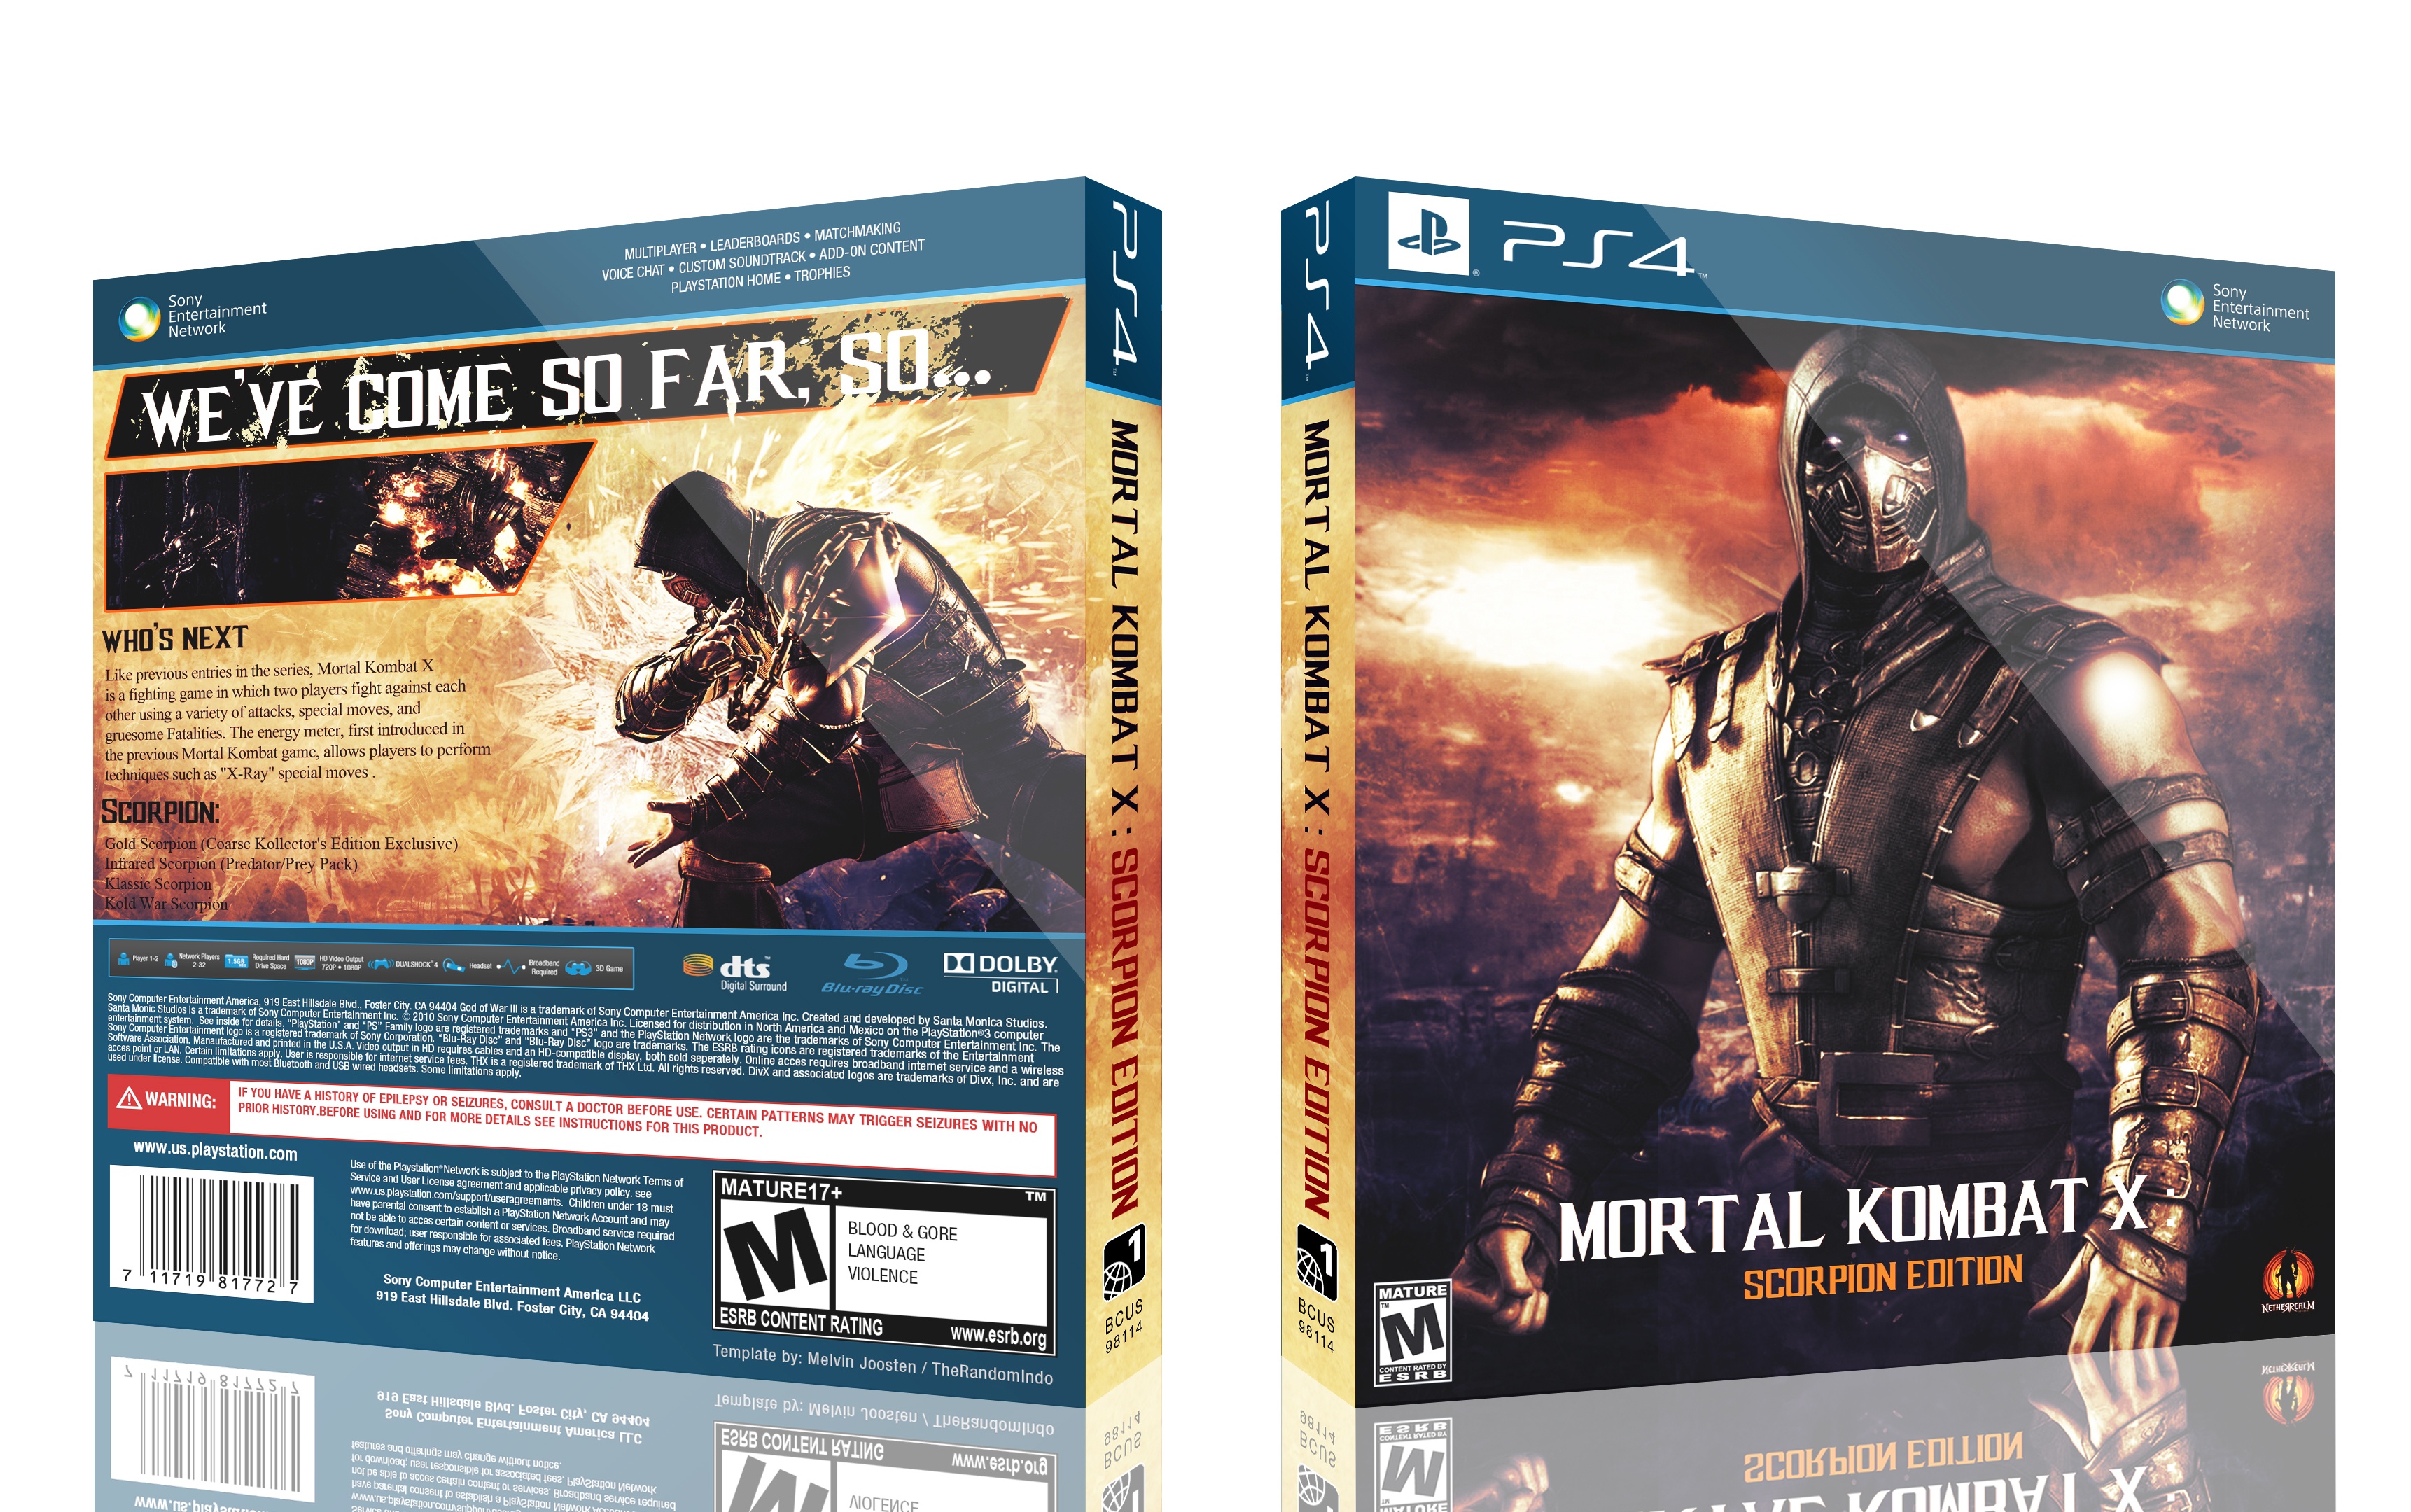 Mortal Kombat X : Scorpion Edition box cover